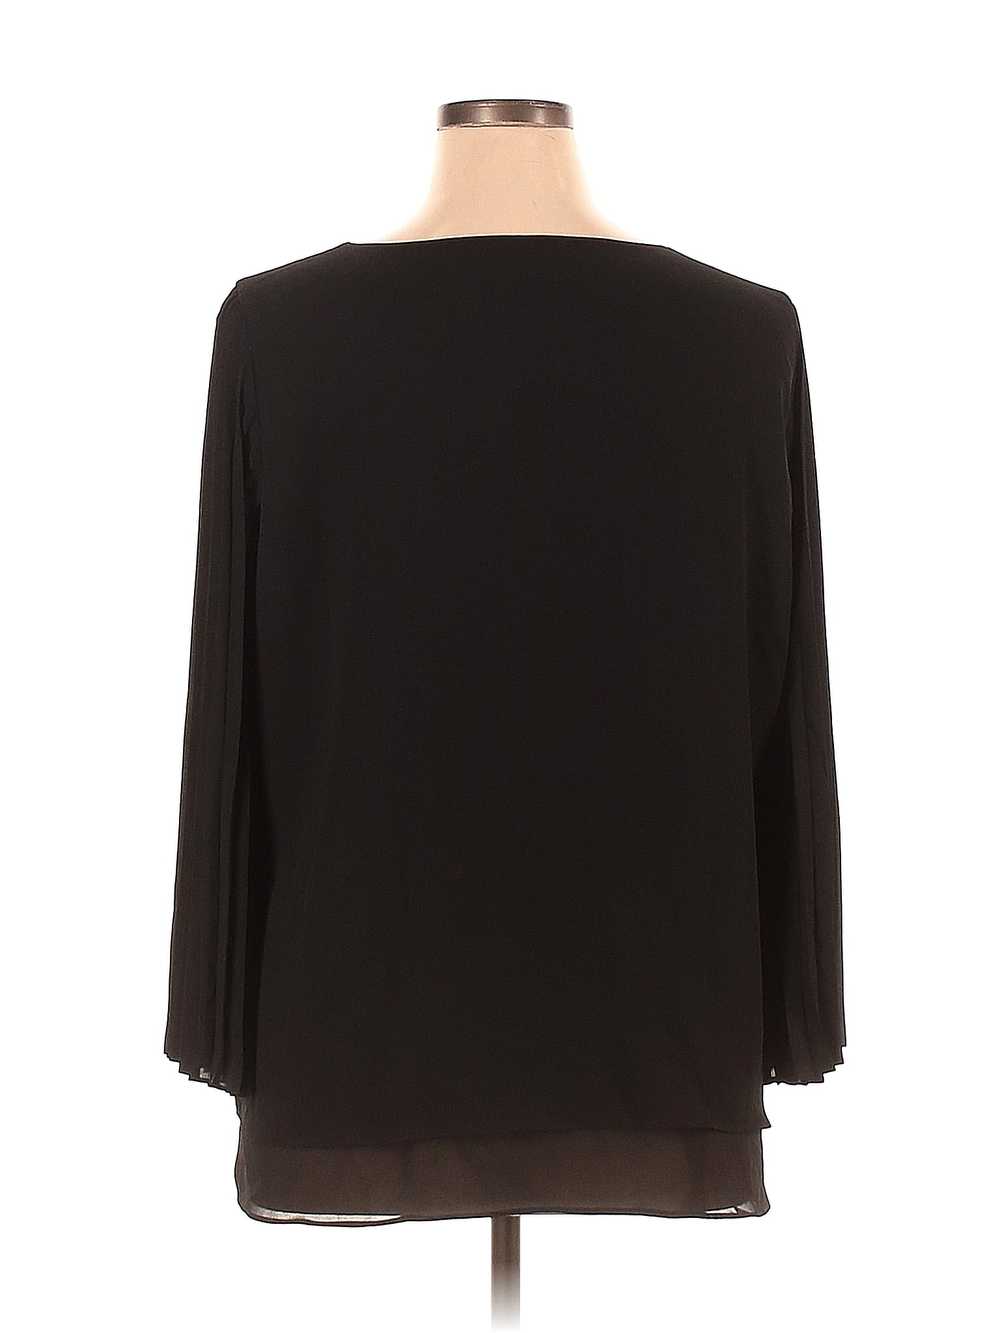 Laurie Felt Women Black Long Sleeve Blouse XL - image 2